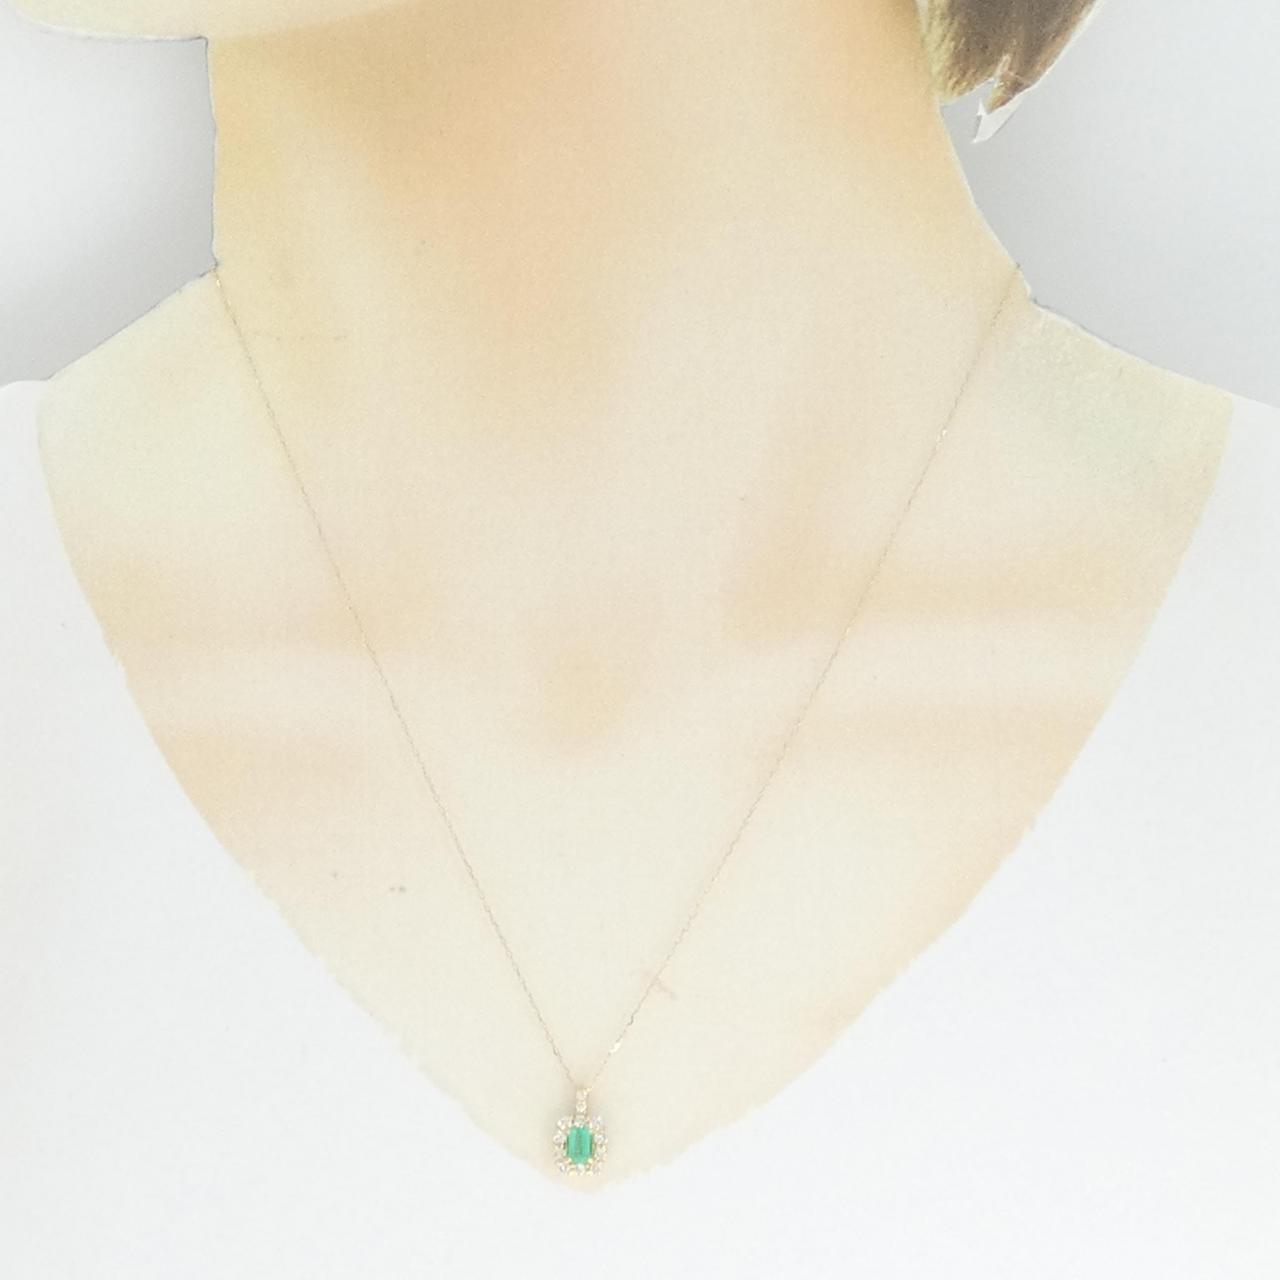 K18YG emerald necklace 0.31CT